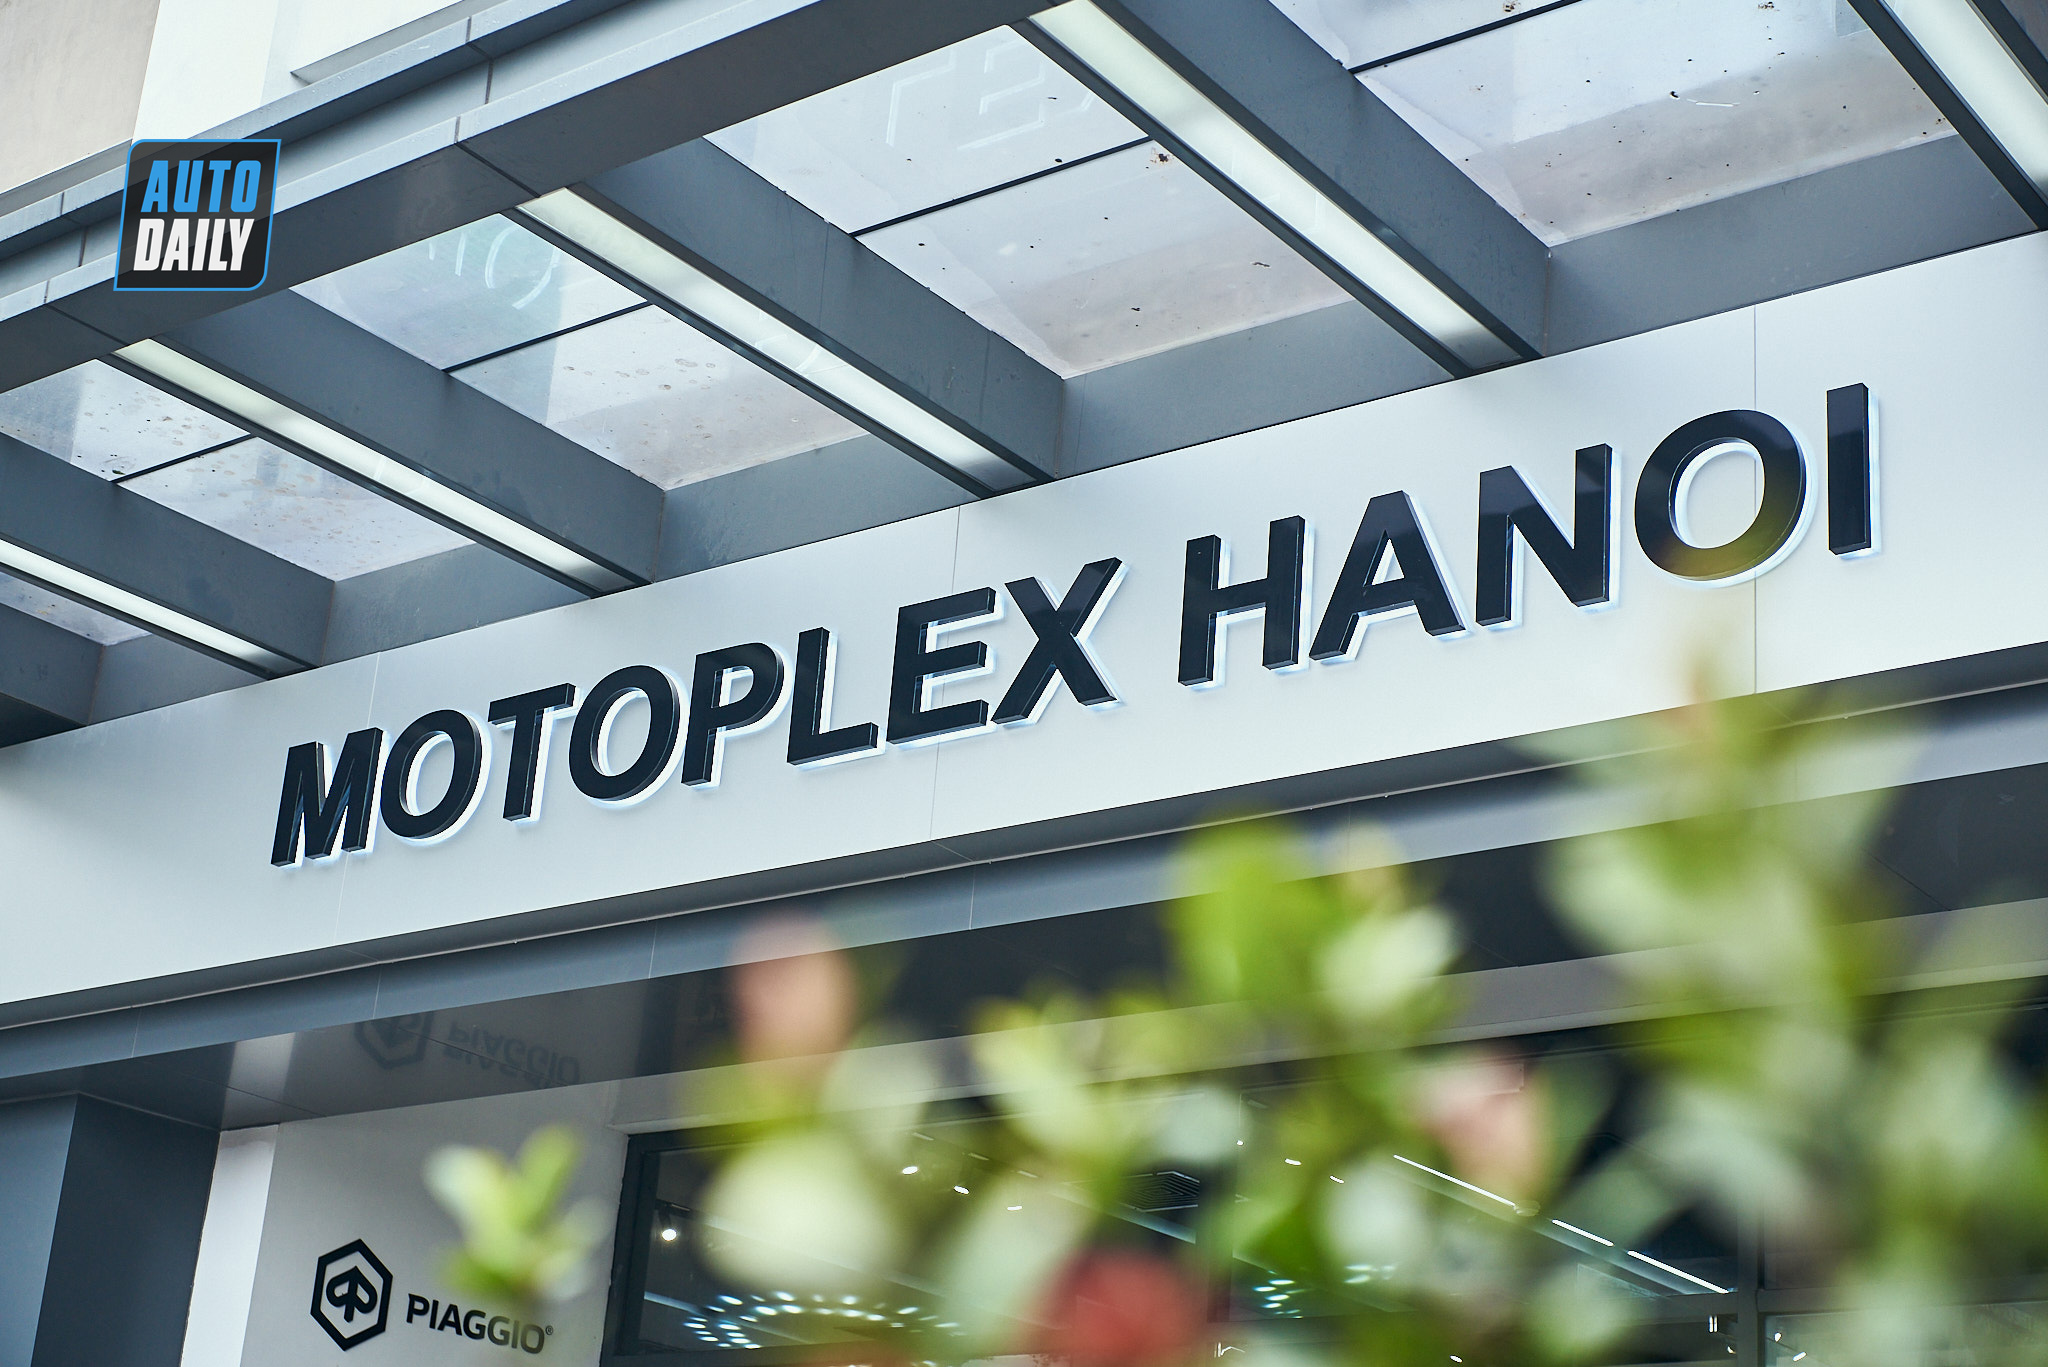 Chính thức khai trương Motoplex Hanoi motoplex-hanoi.jpg